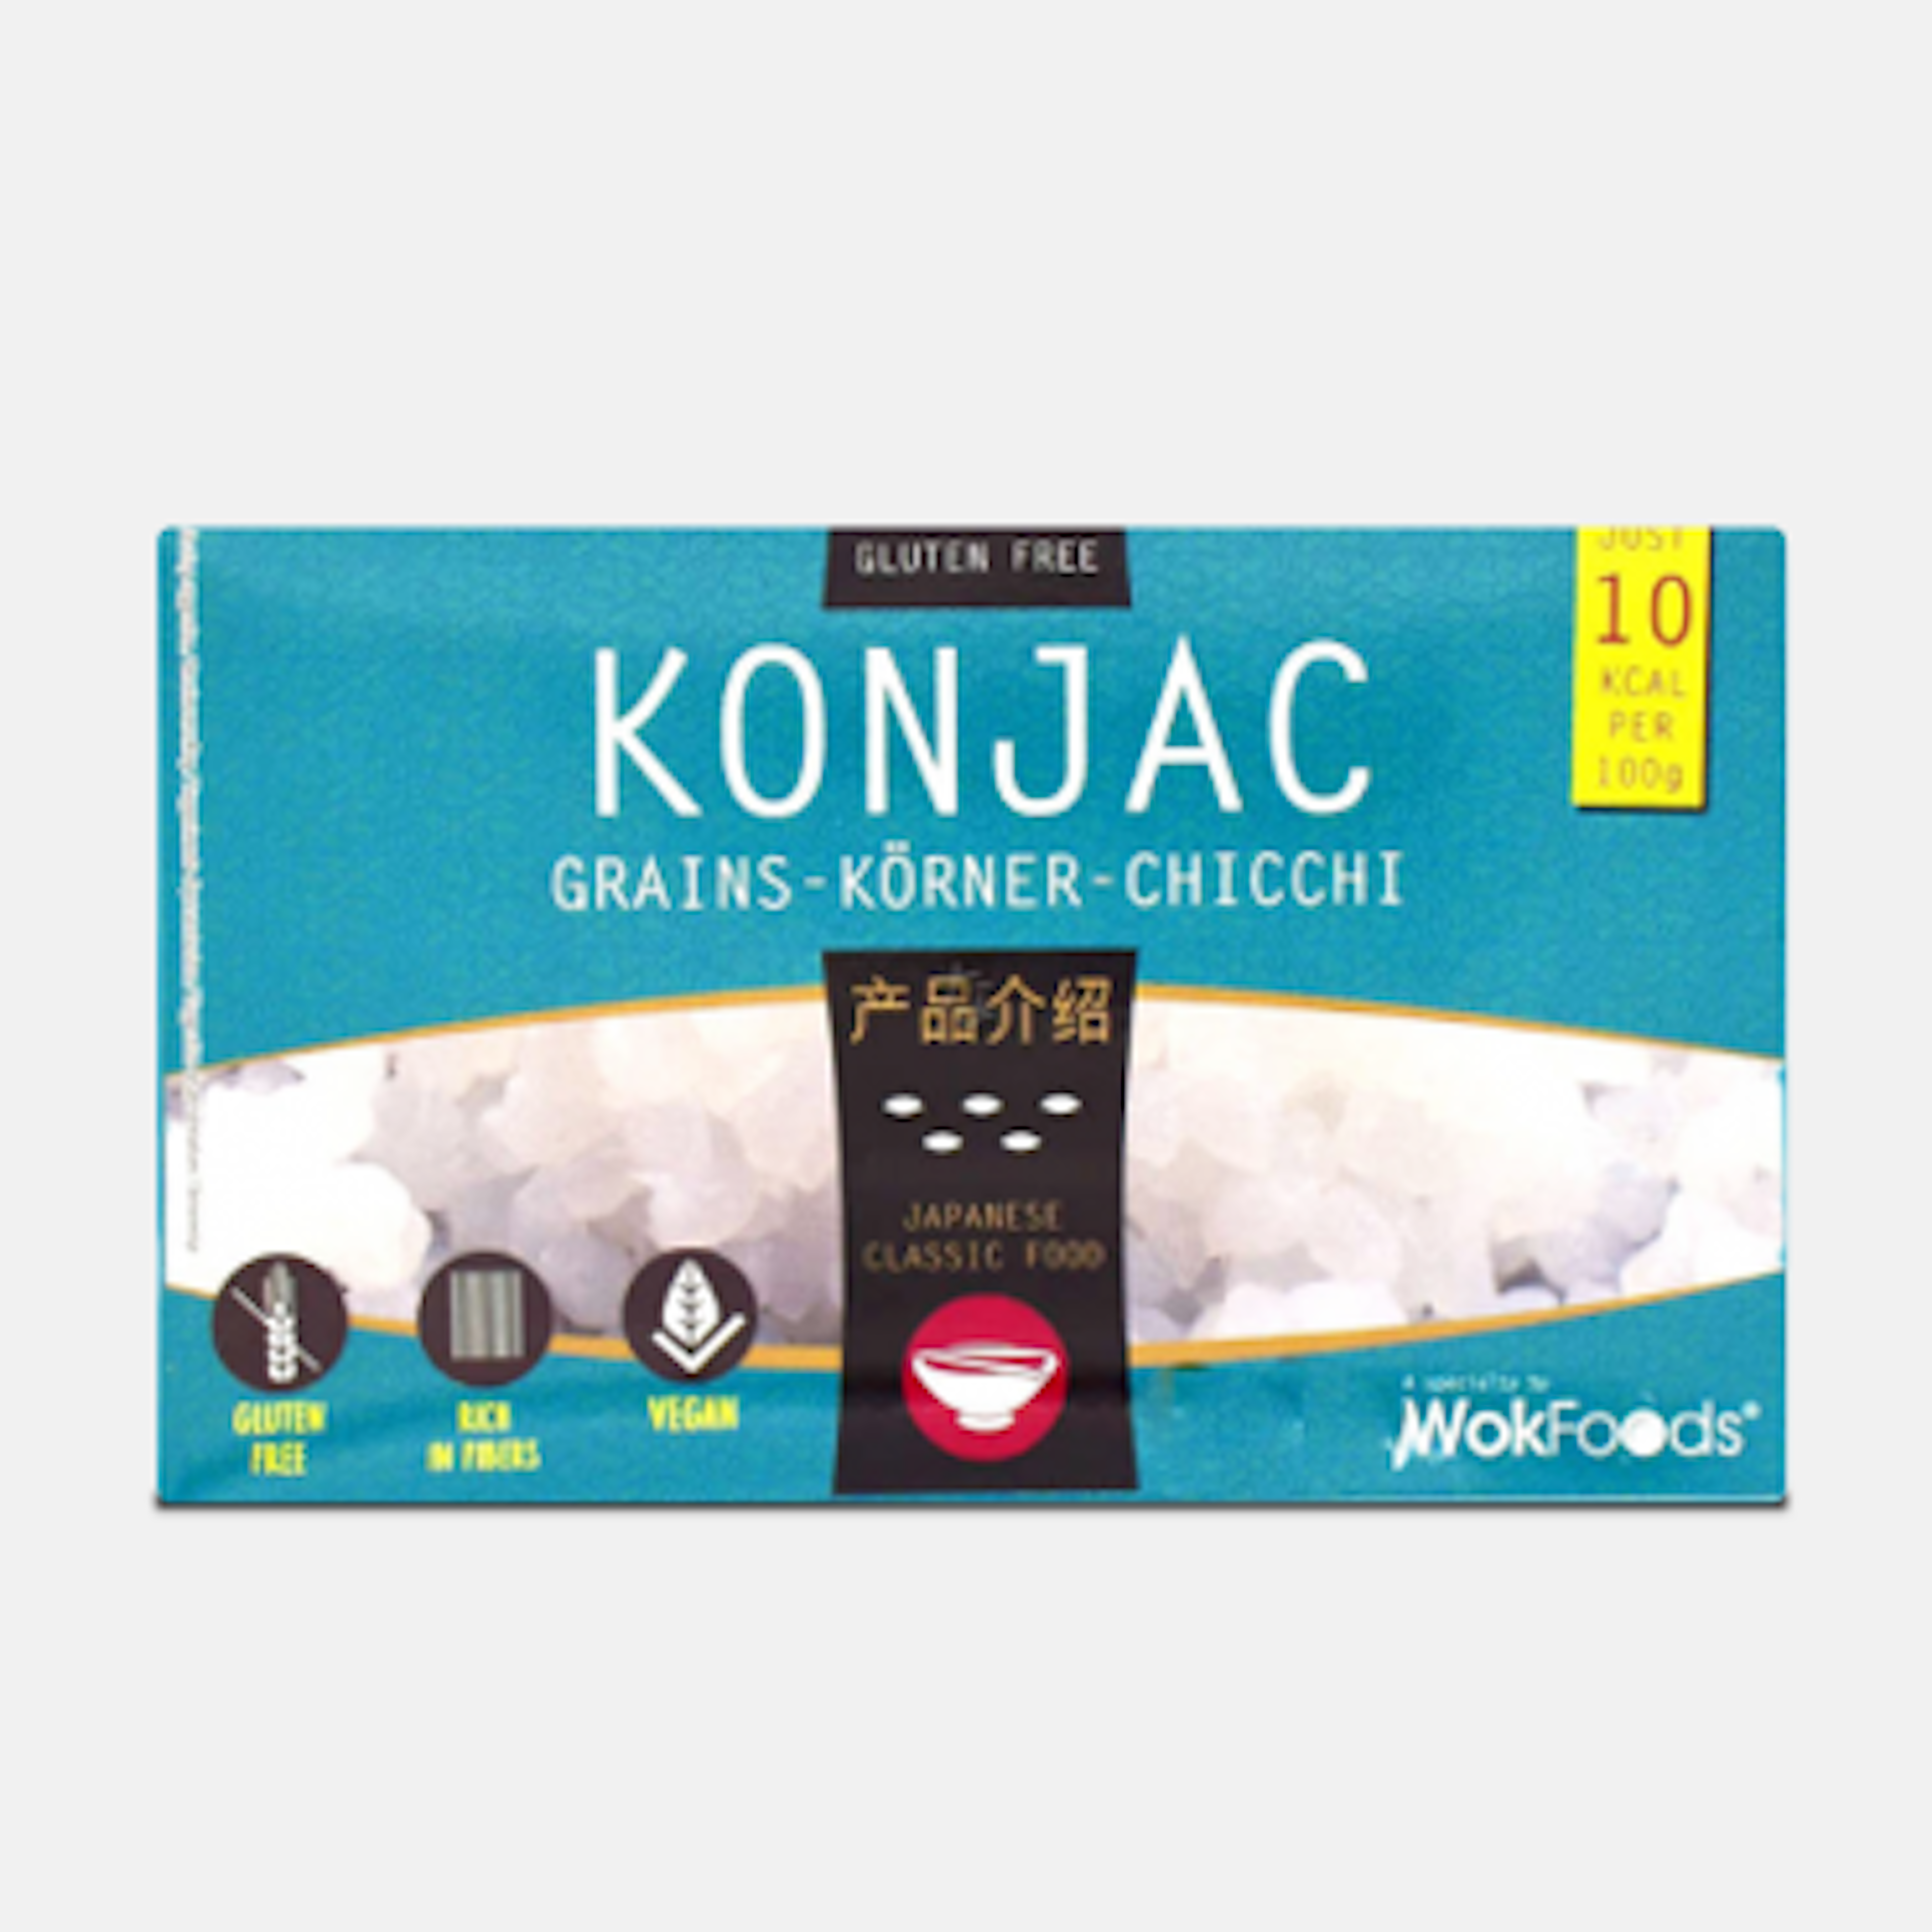 Wok Foods Shirataki Konjac Reis-Körner Chicchi 350g Verpackung.